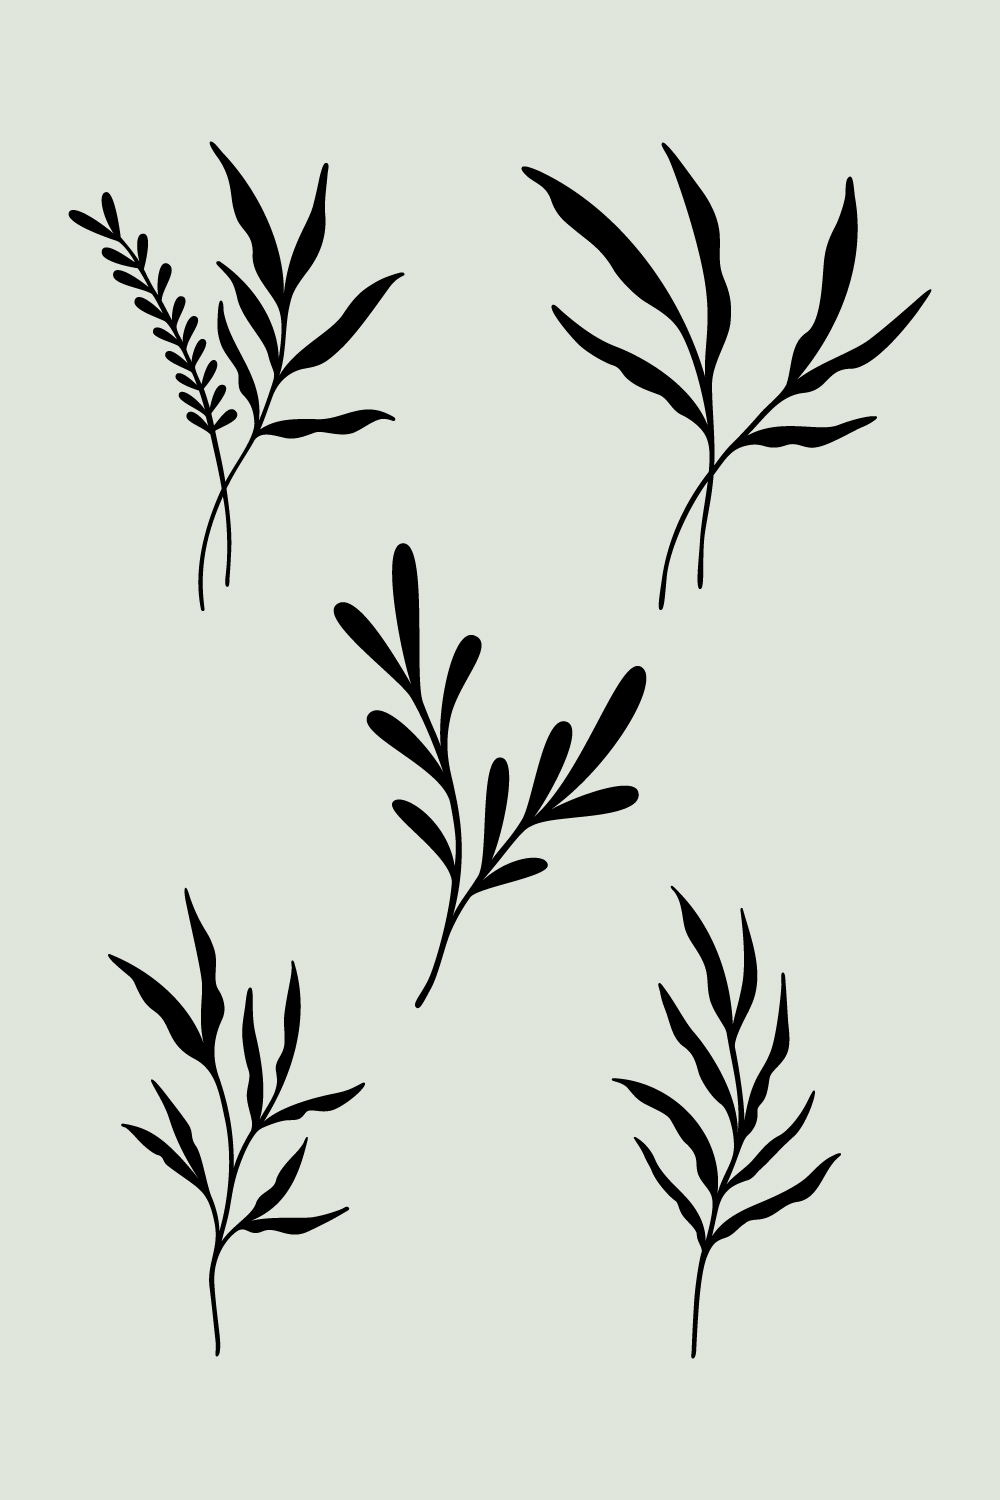 Leaf Design Bundle Of 5 | Black Silhouette Leaves | Leafy Branches | Botanical Vector Illustrations | Tropical Rainforest Plants pinterest preview image.